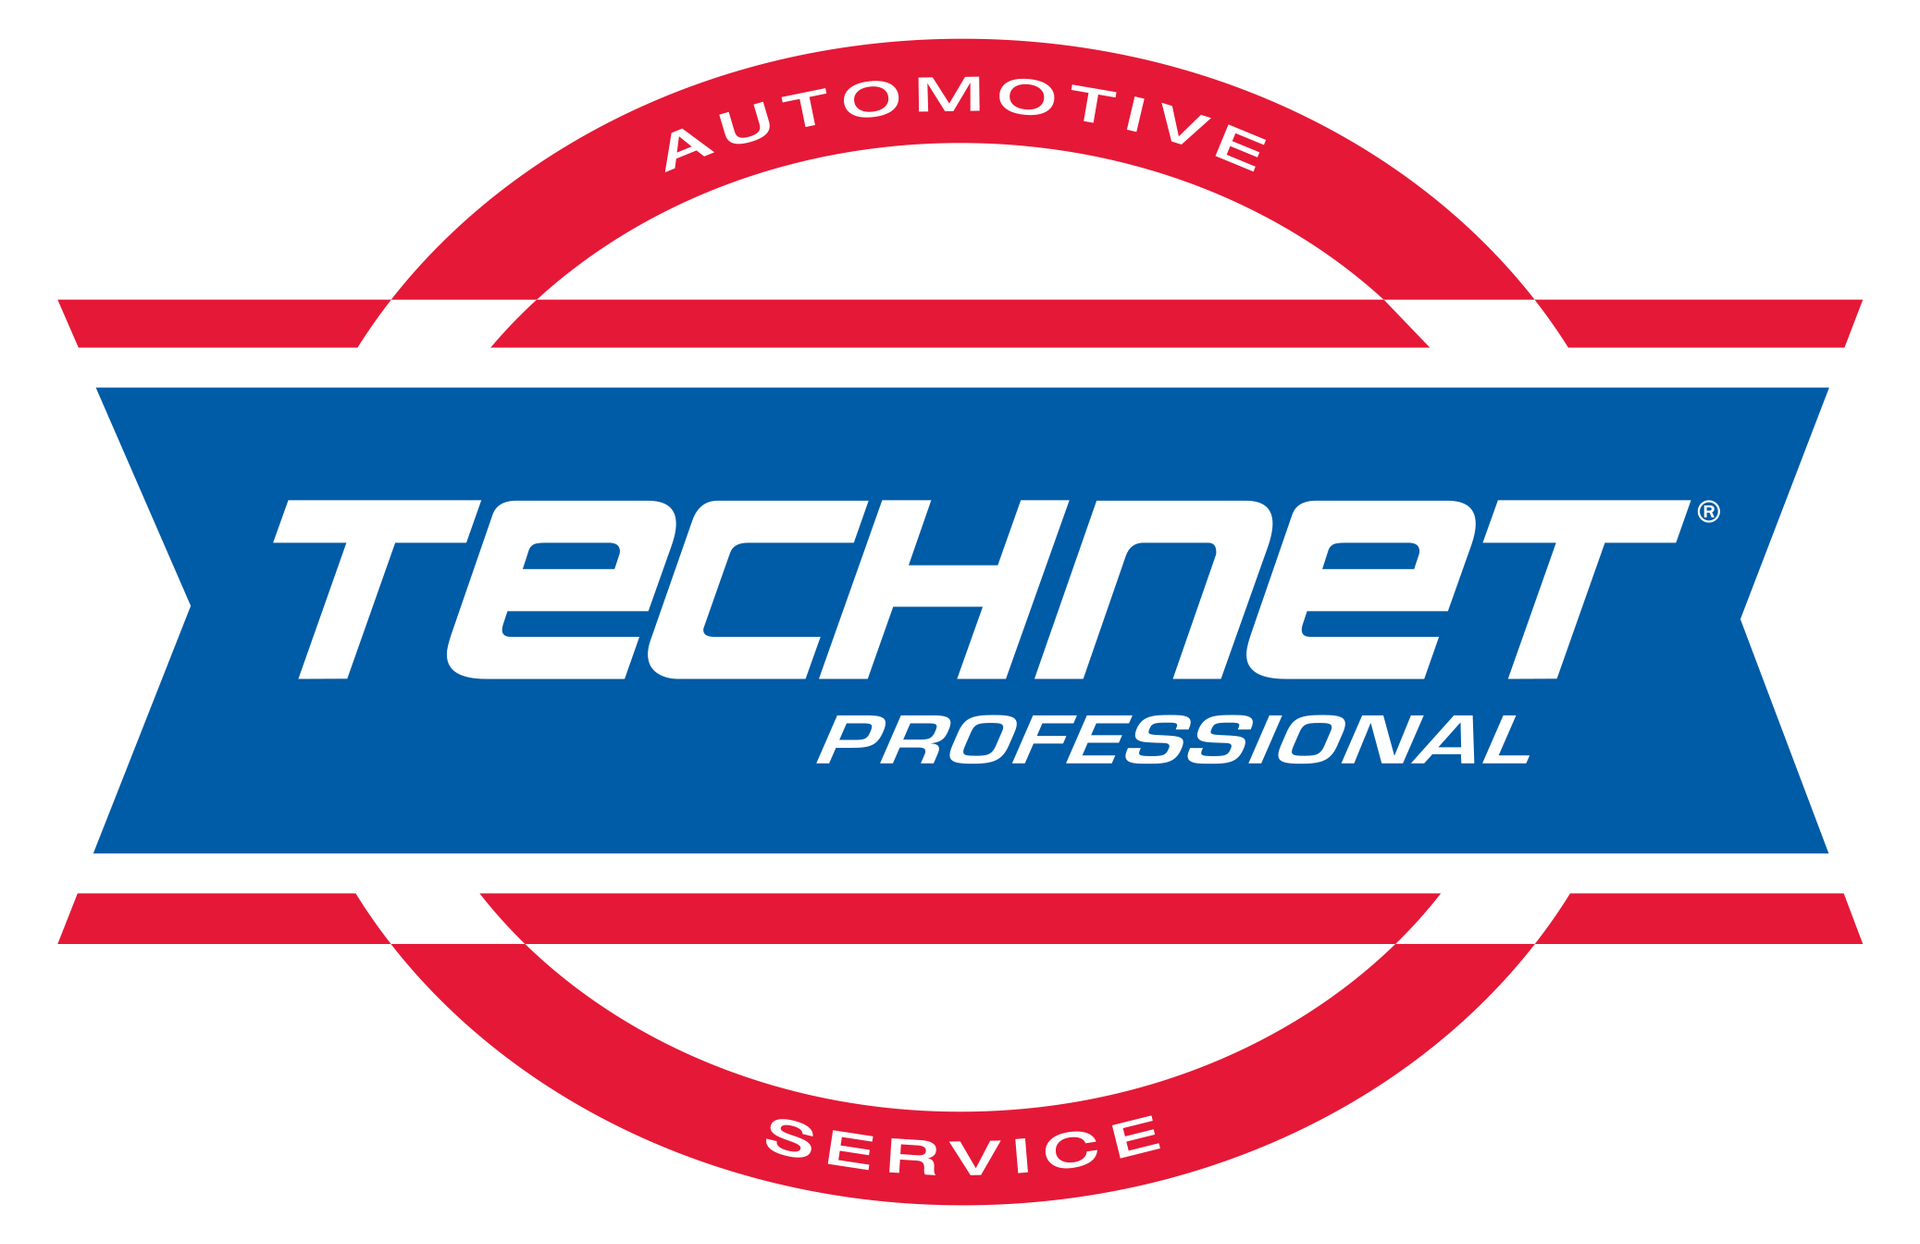 TechNet Logo | 1 Auto Center Corp